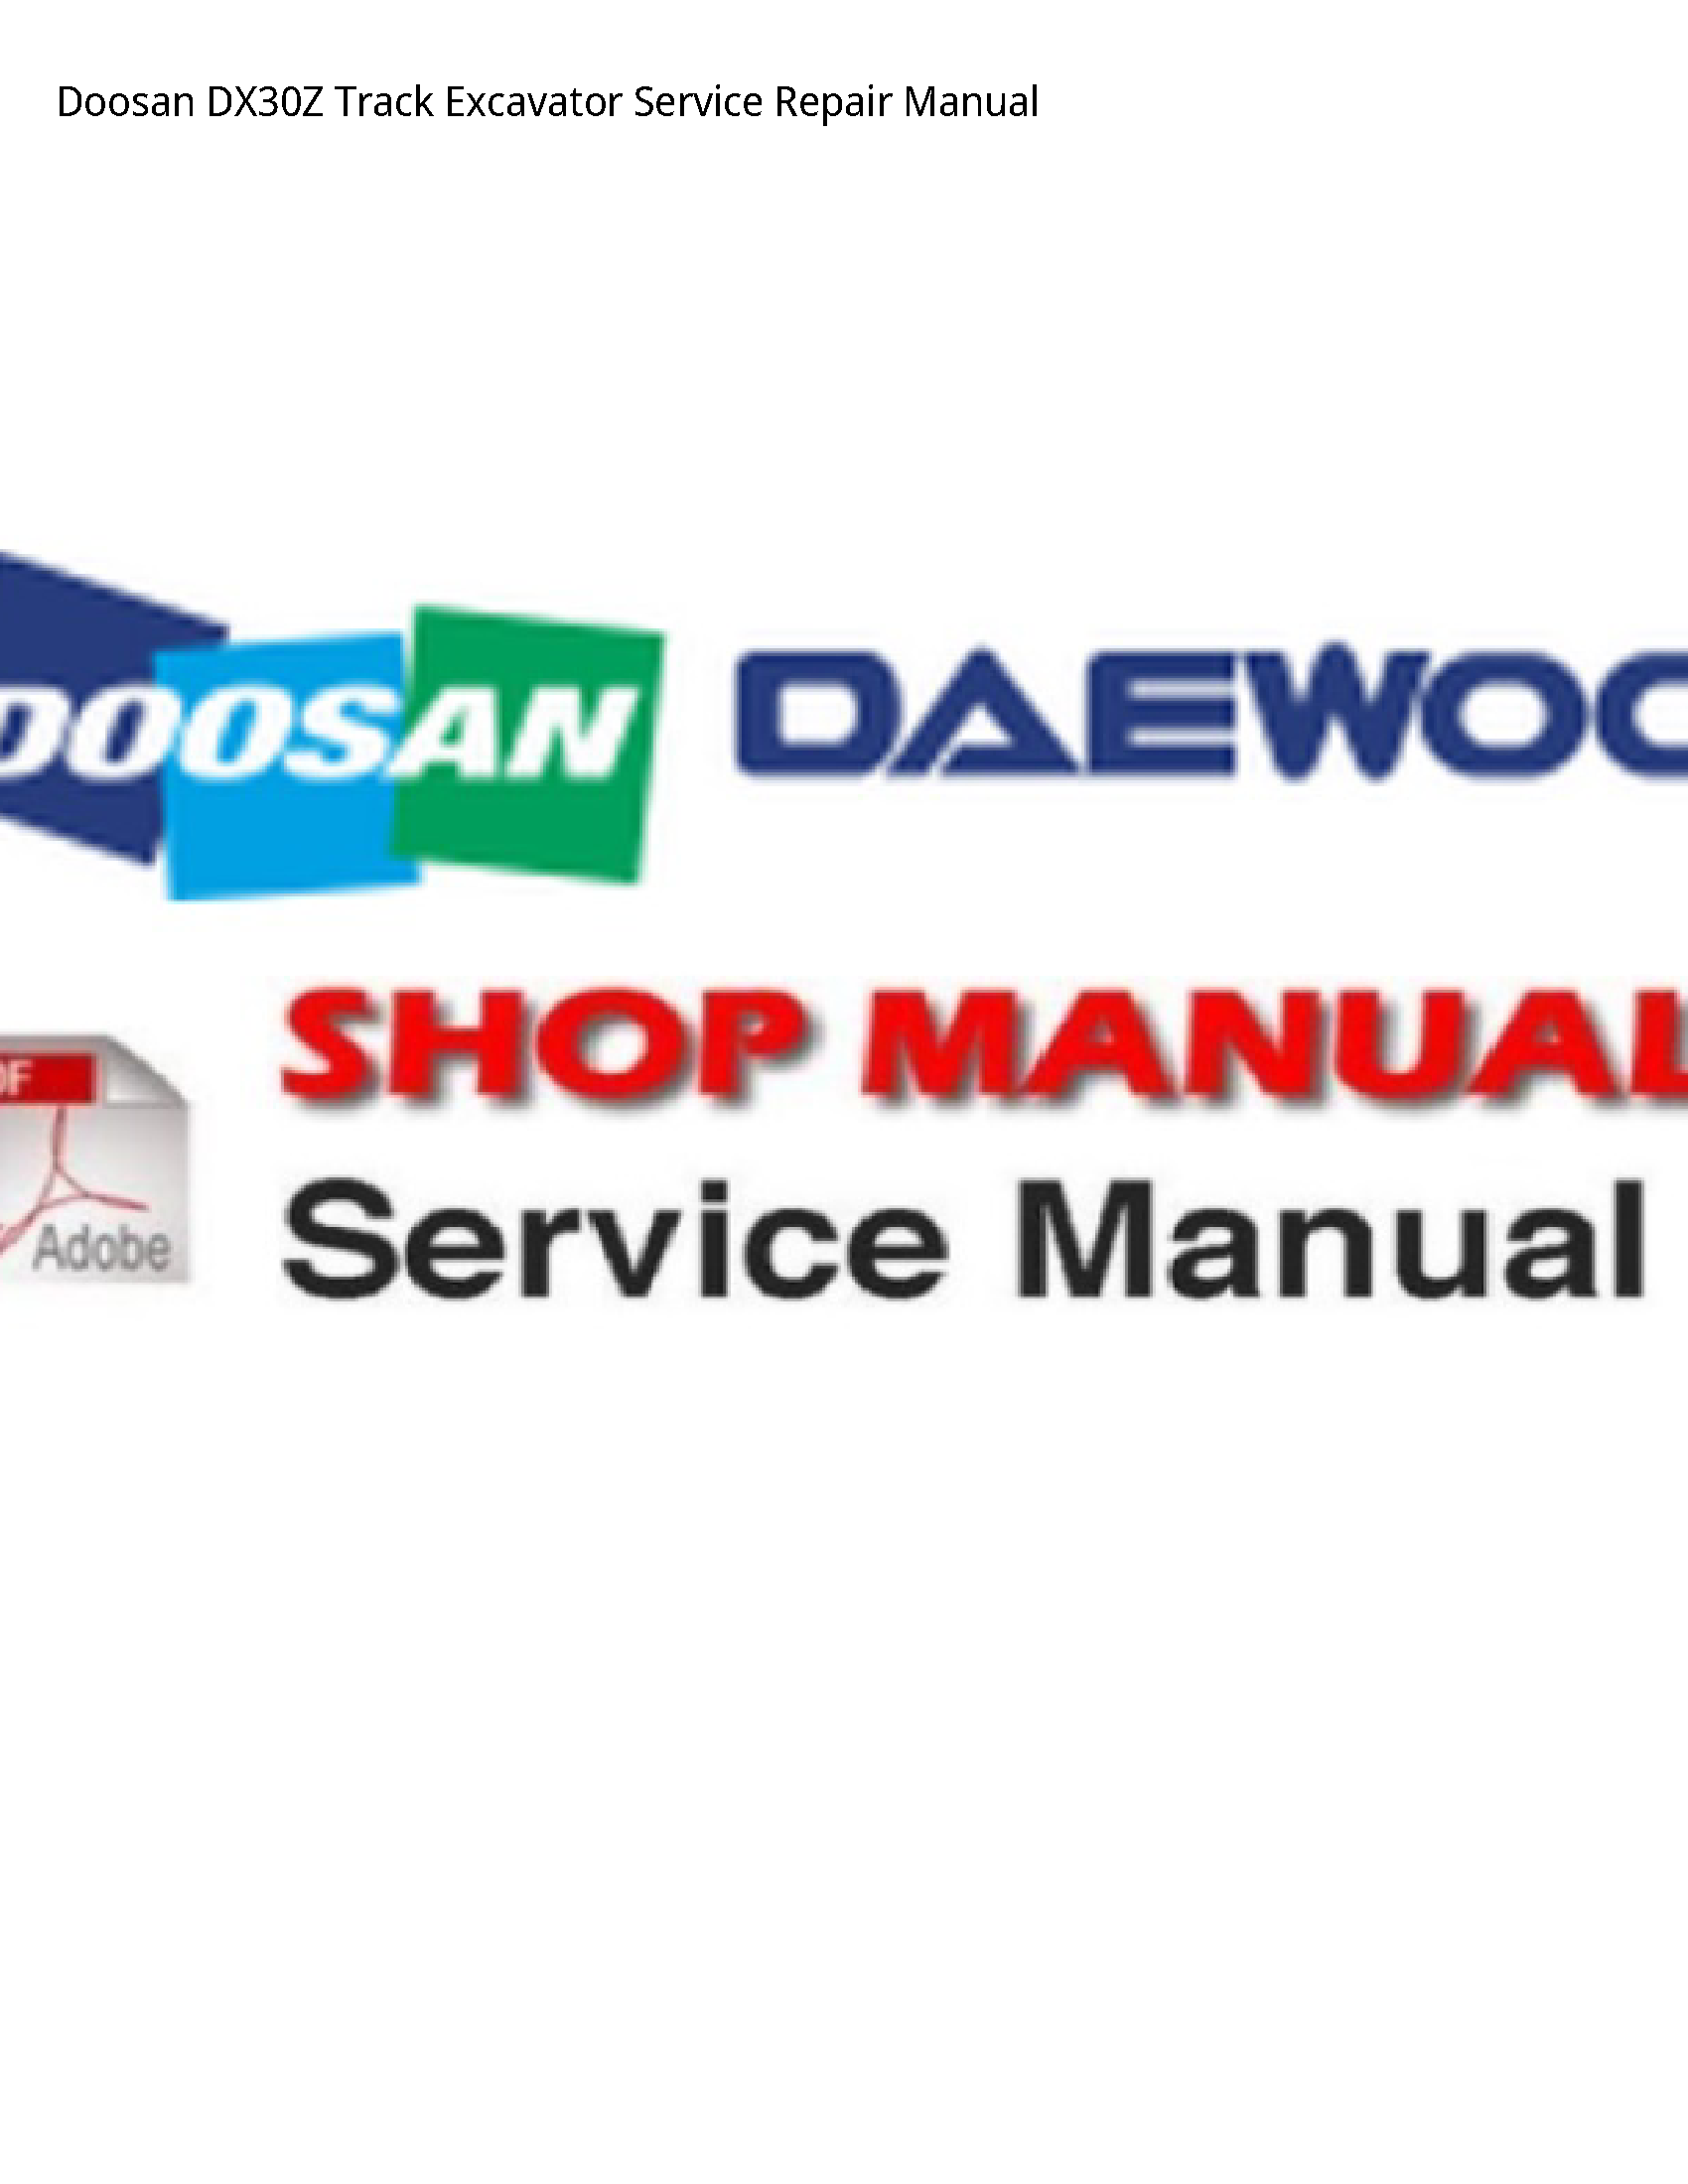 Doosan DX30Z Track Excavator manual